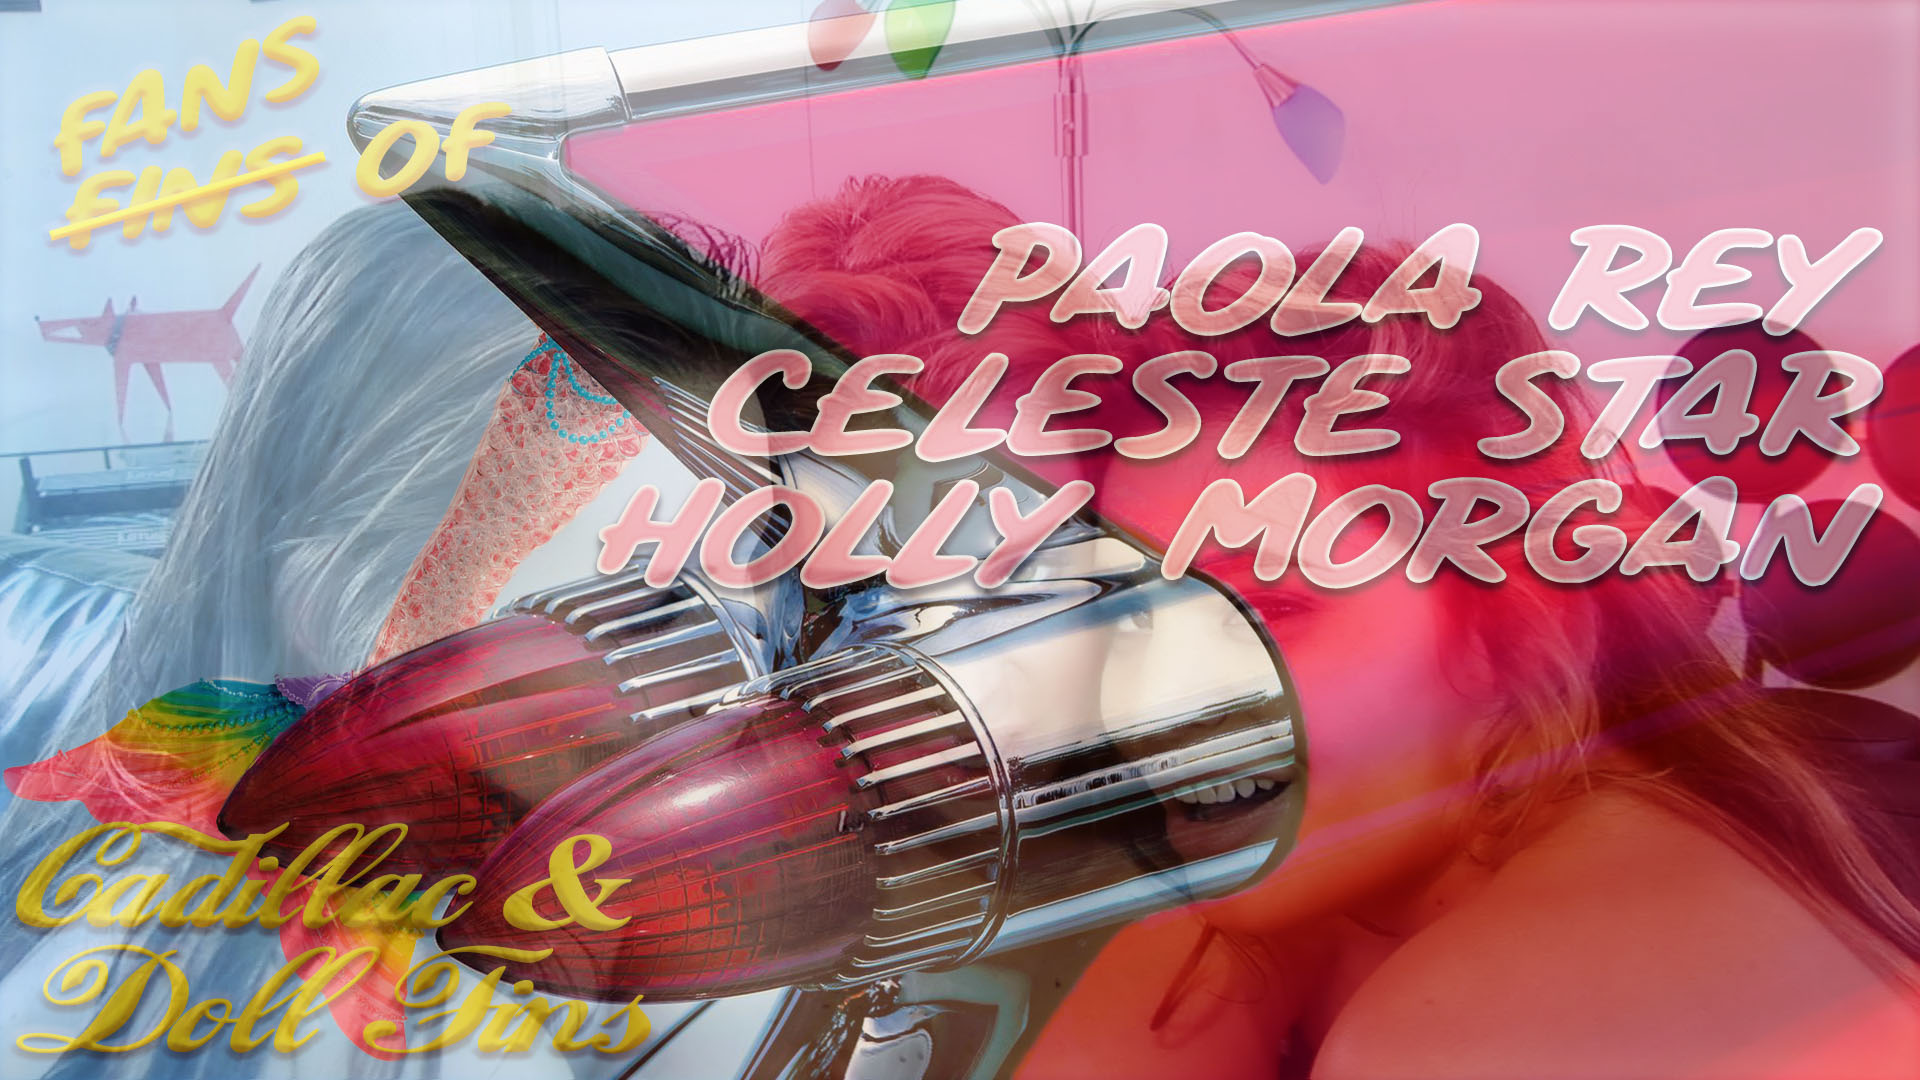 Holly Morgan, Celeste Star, Paola Rey